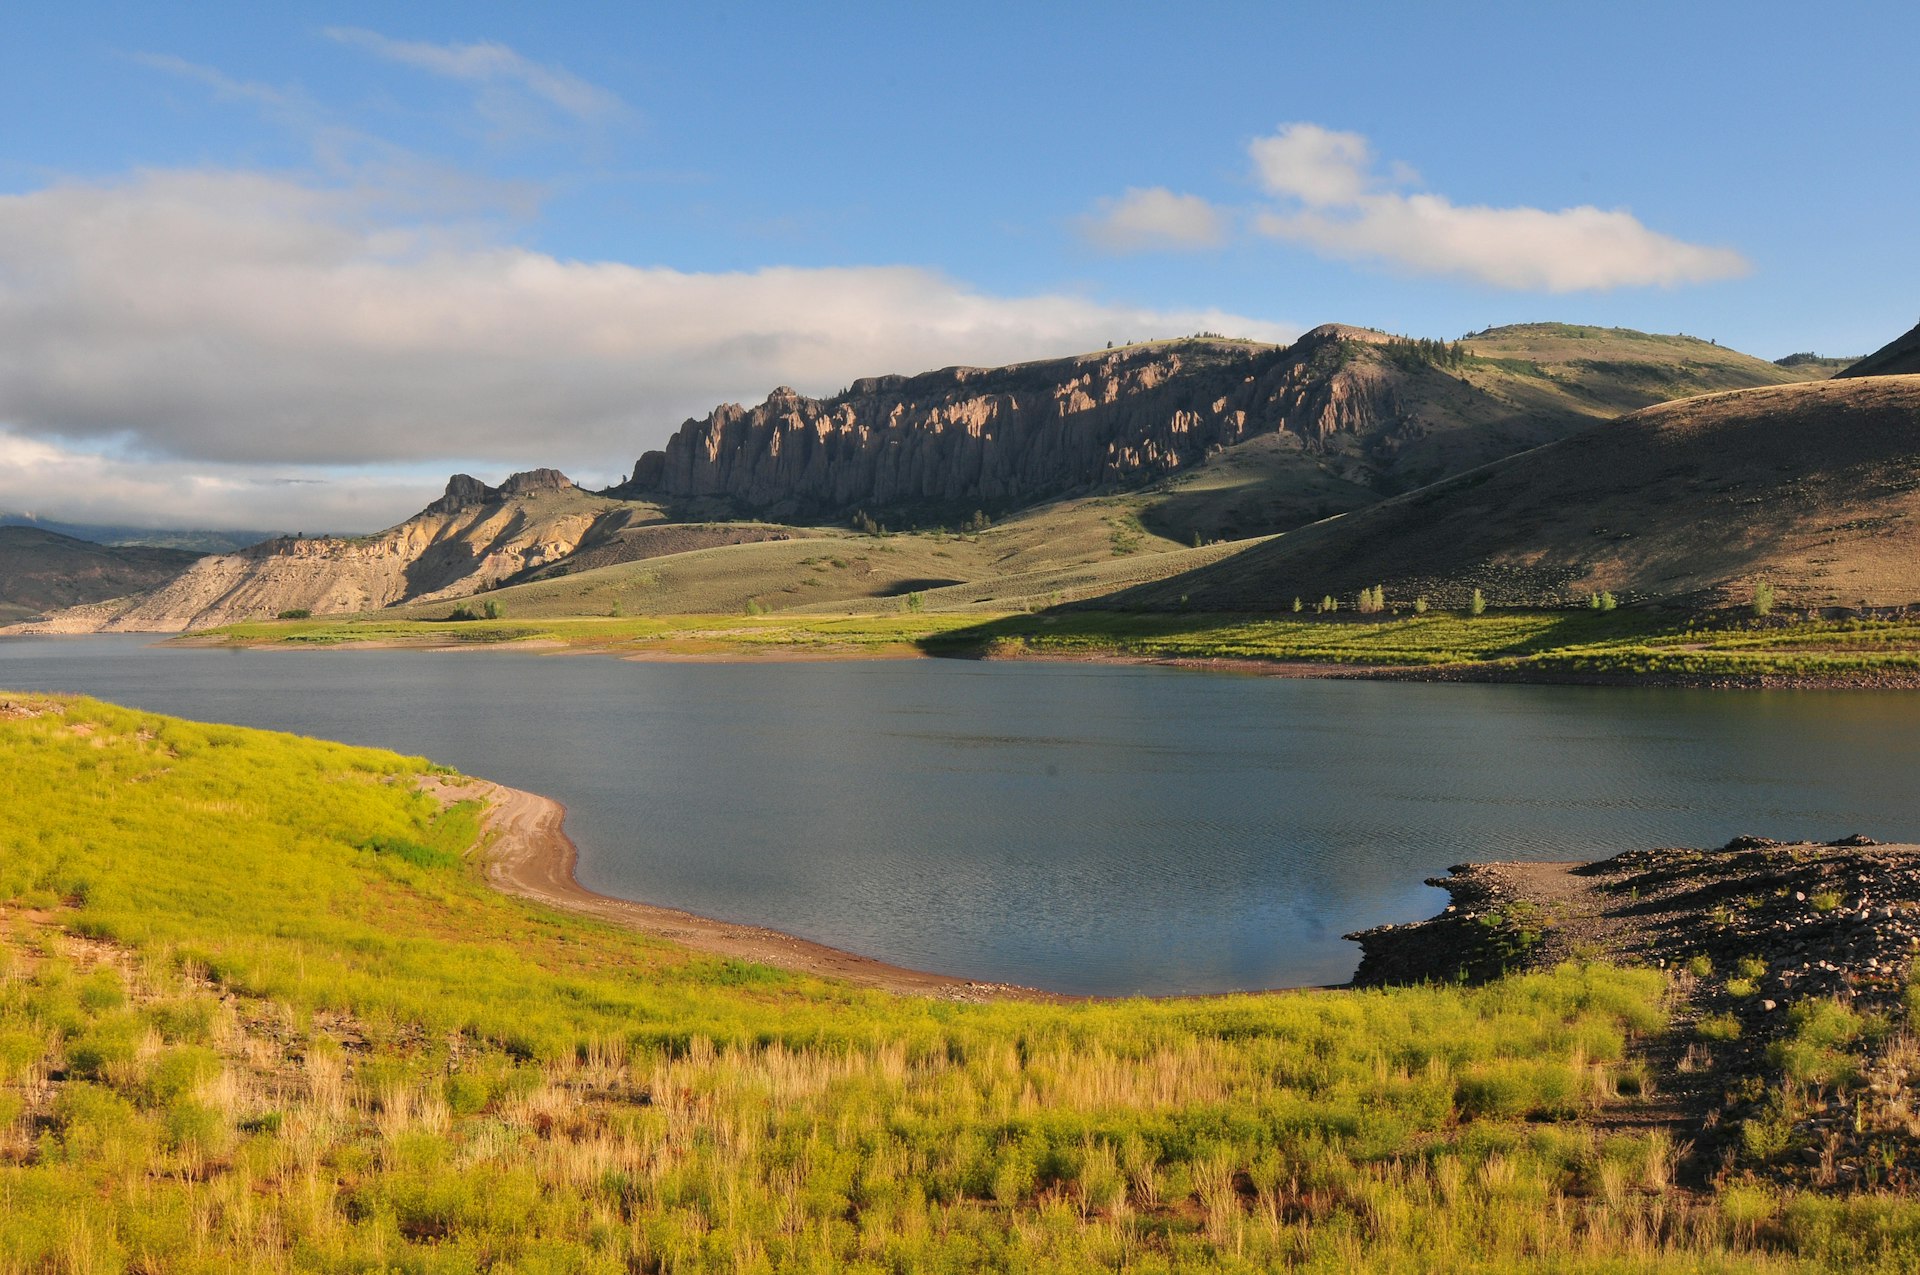 Lakeshore of Blue Mesa Reservoir in Colorado